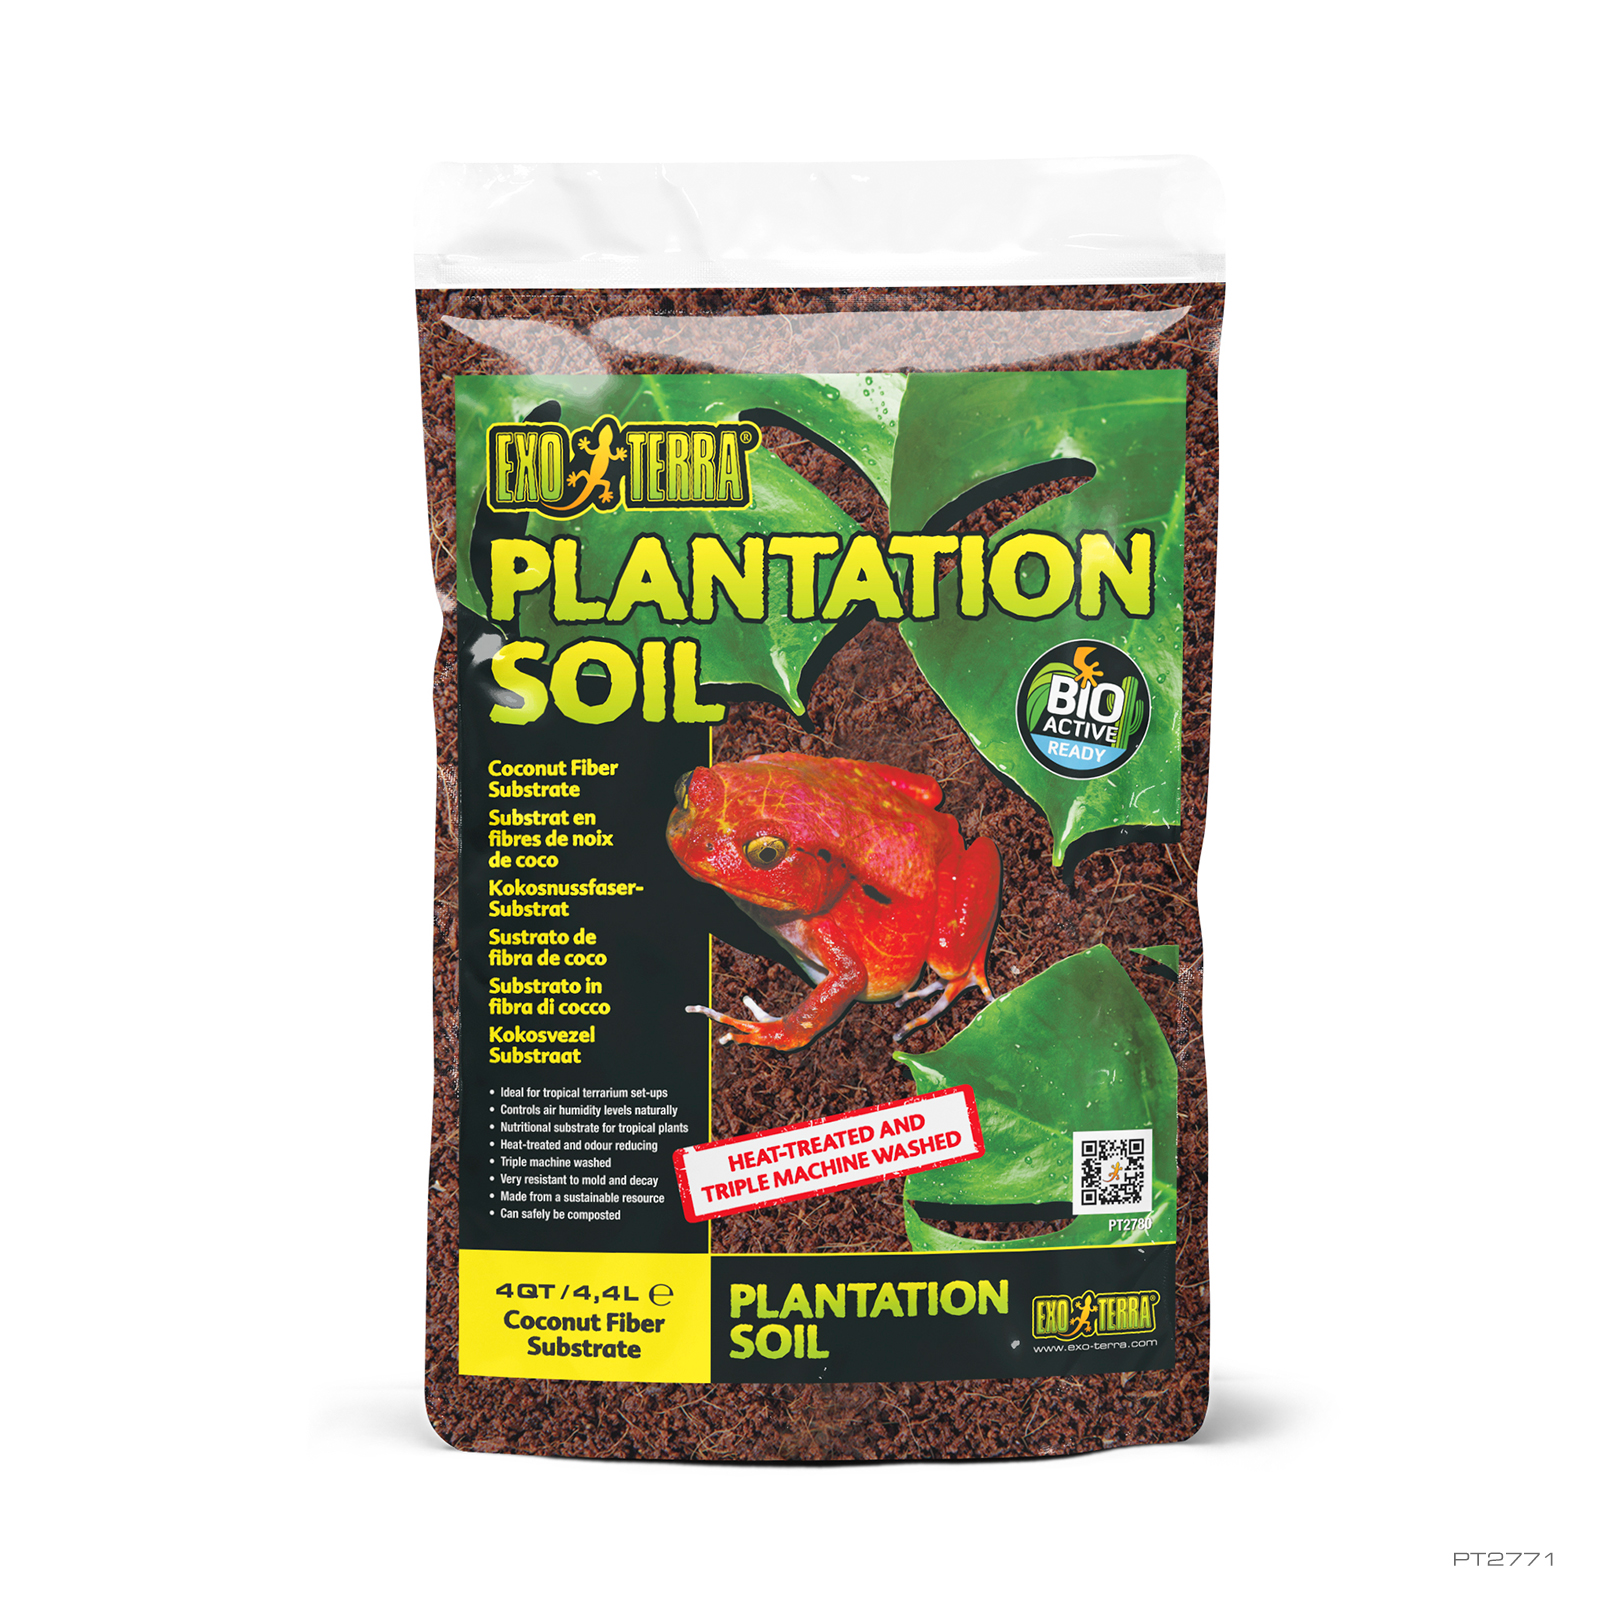 Plantation Soil 4QT - 4,4L